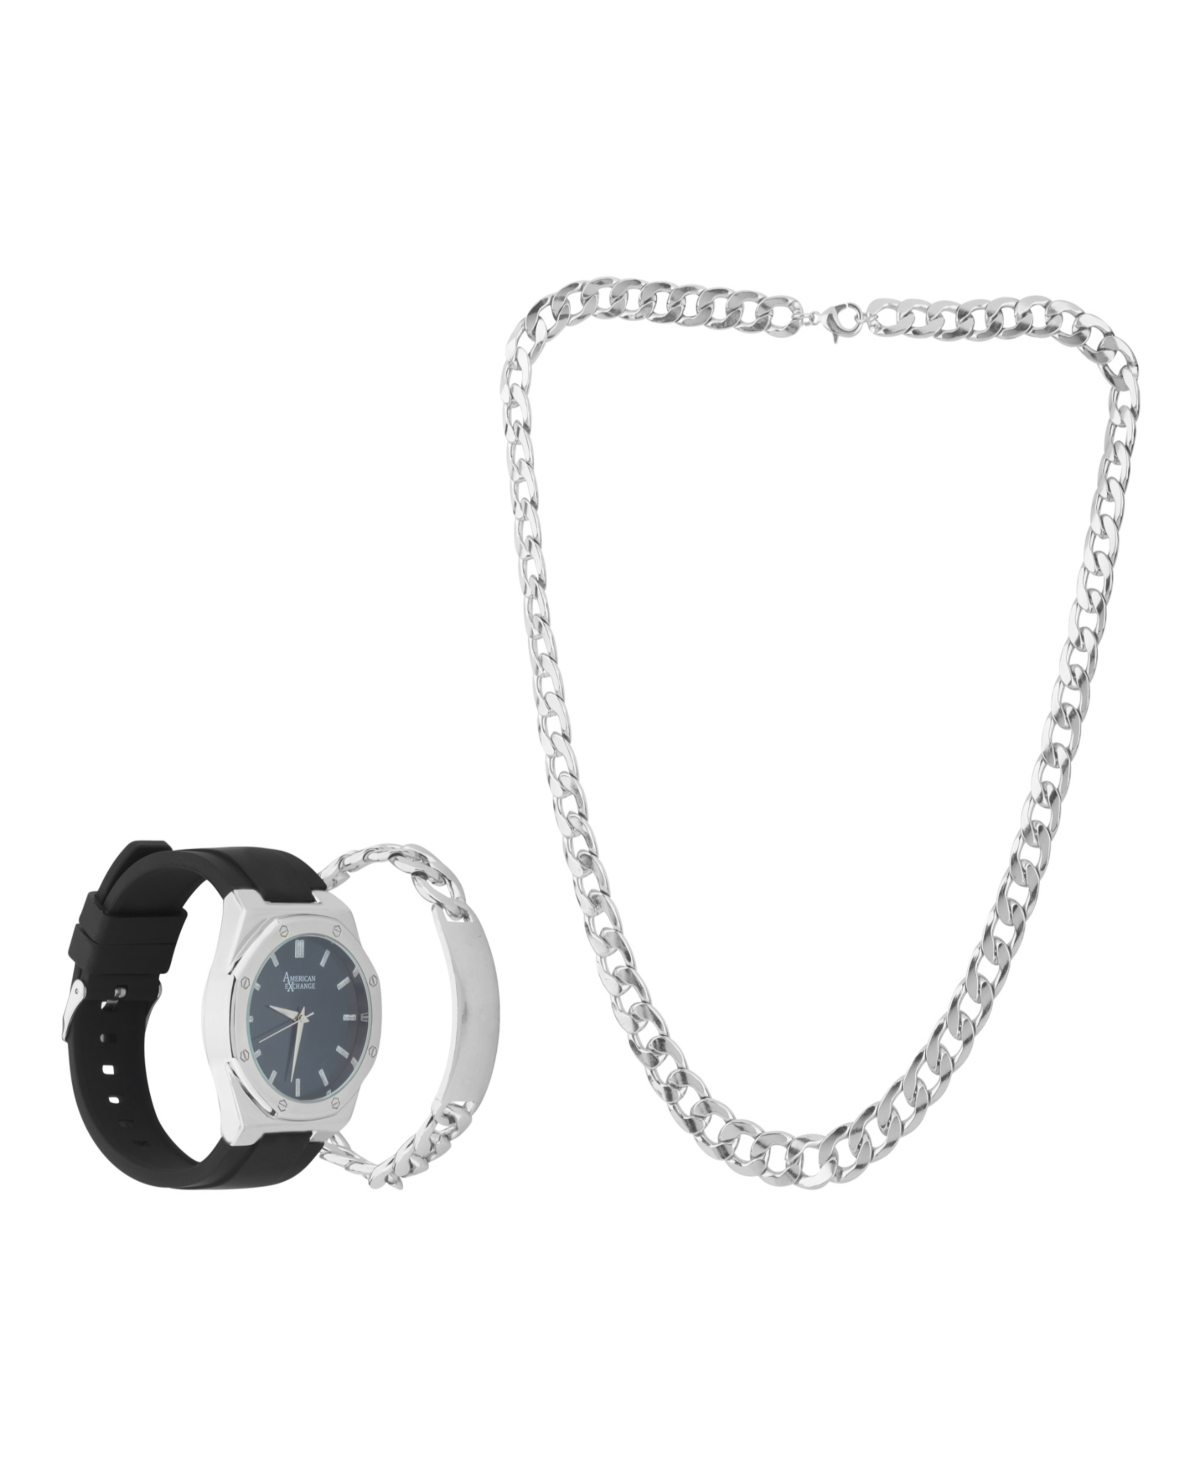 Shop American Exchange Men's Quartz Black Silicone Strap Watch 42mm Gift Set